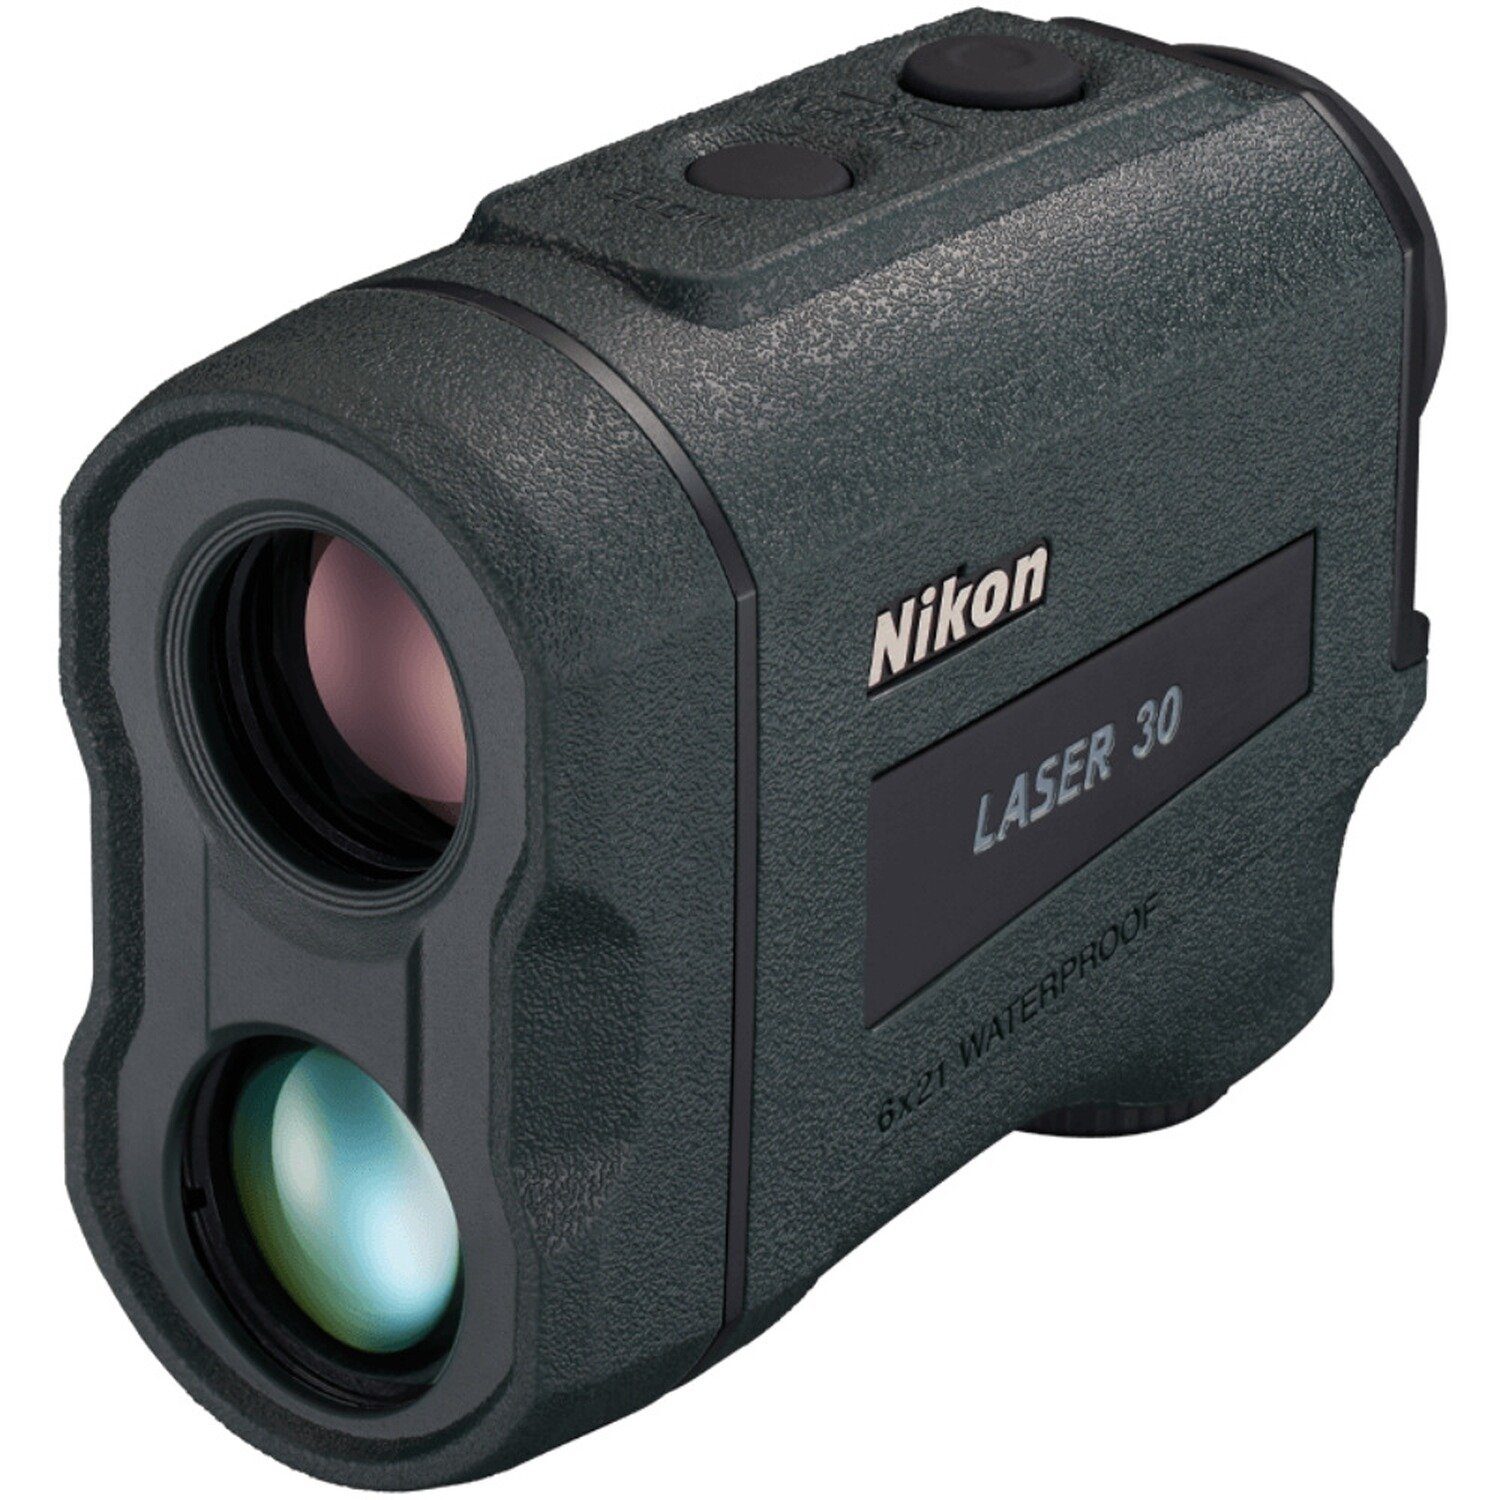 30 Nikon Entfernungsmesser Laser Fernglas